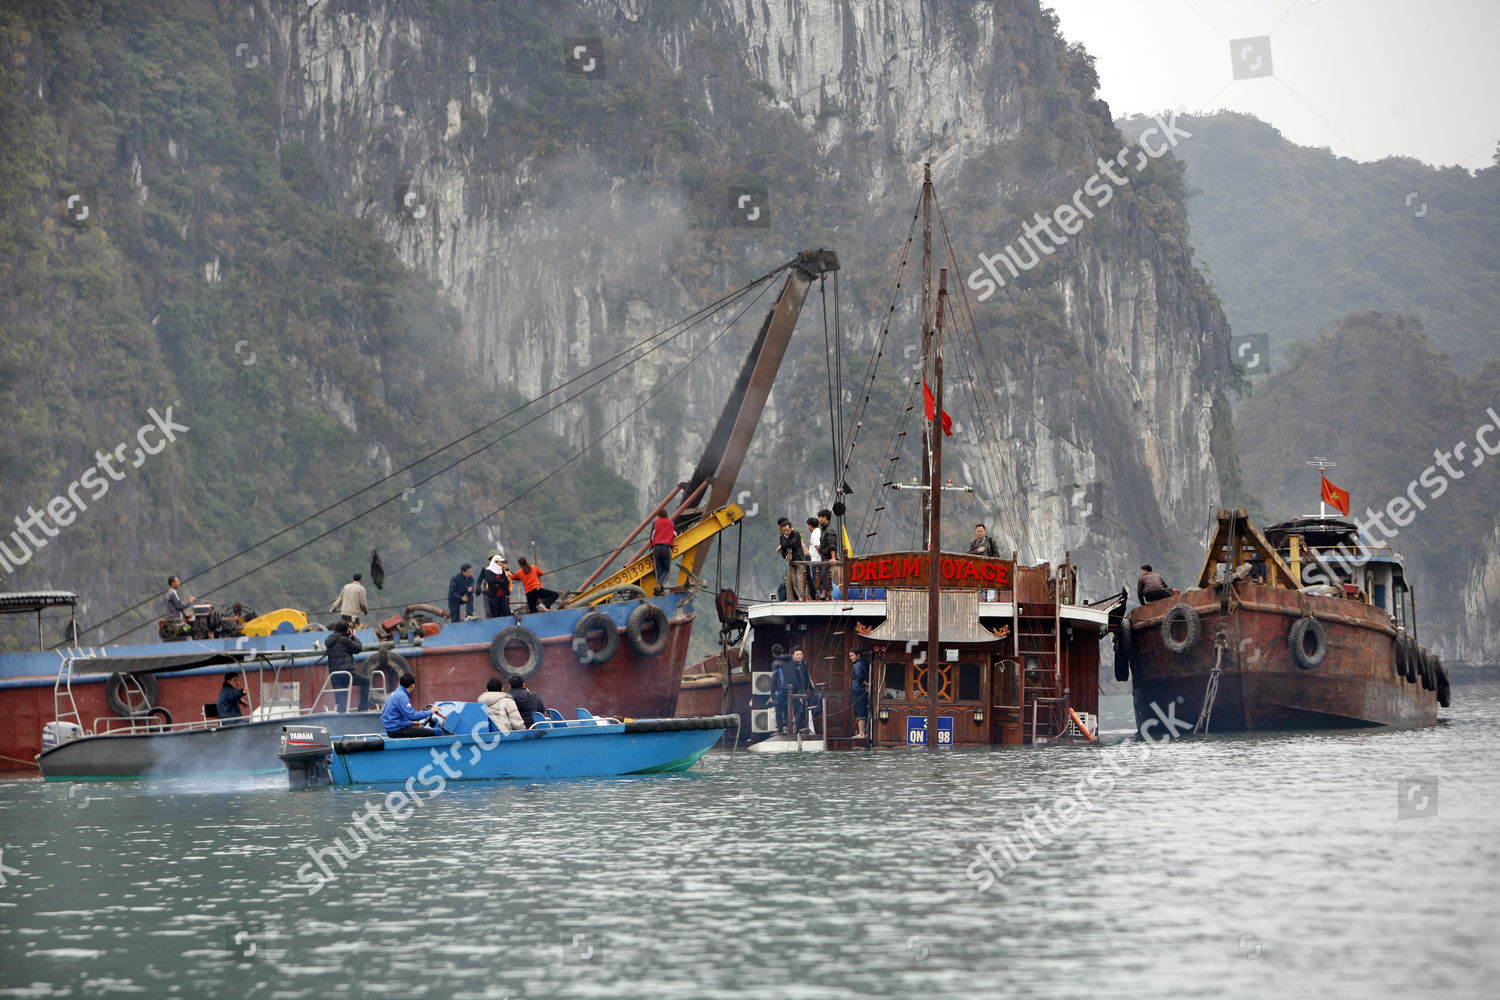 Tourist Boat Dream Voyage Being Salvaged Near Editorial